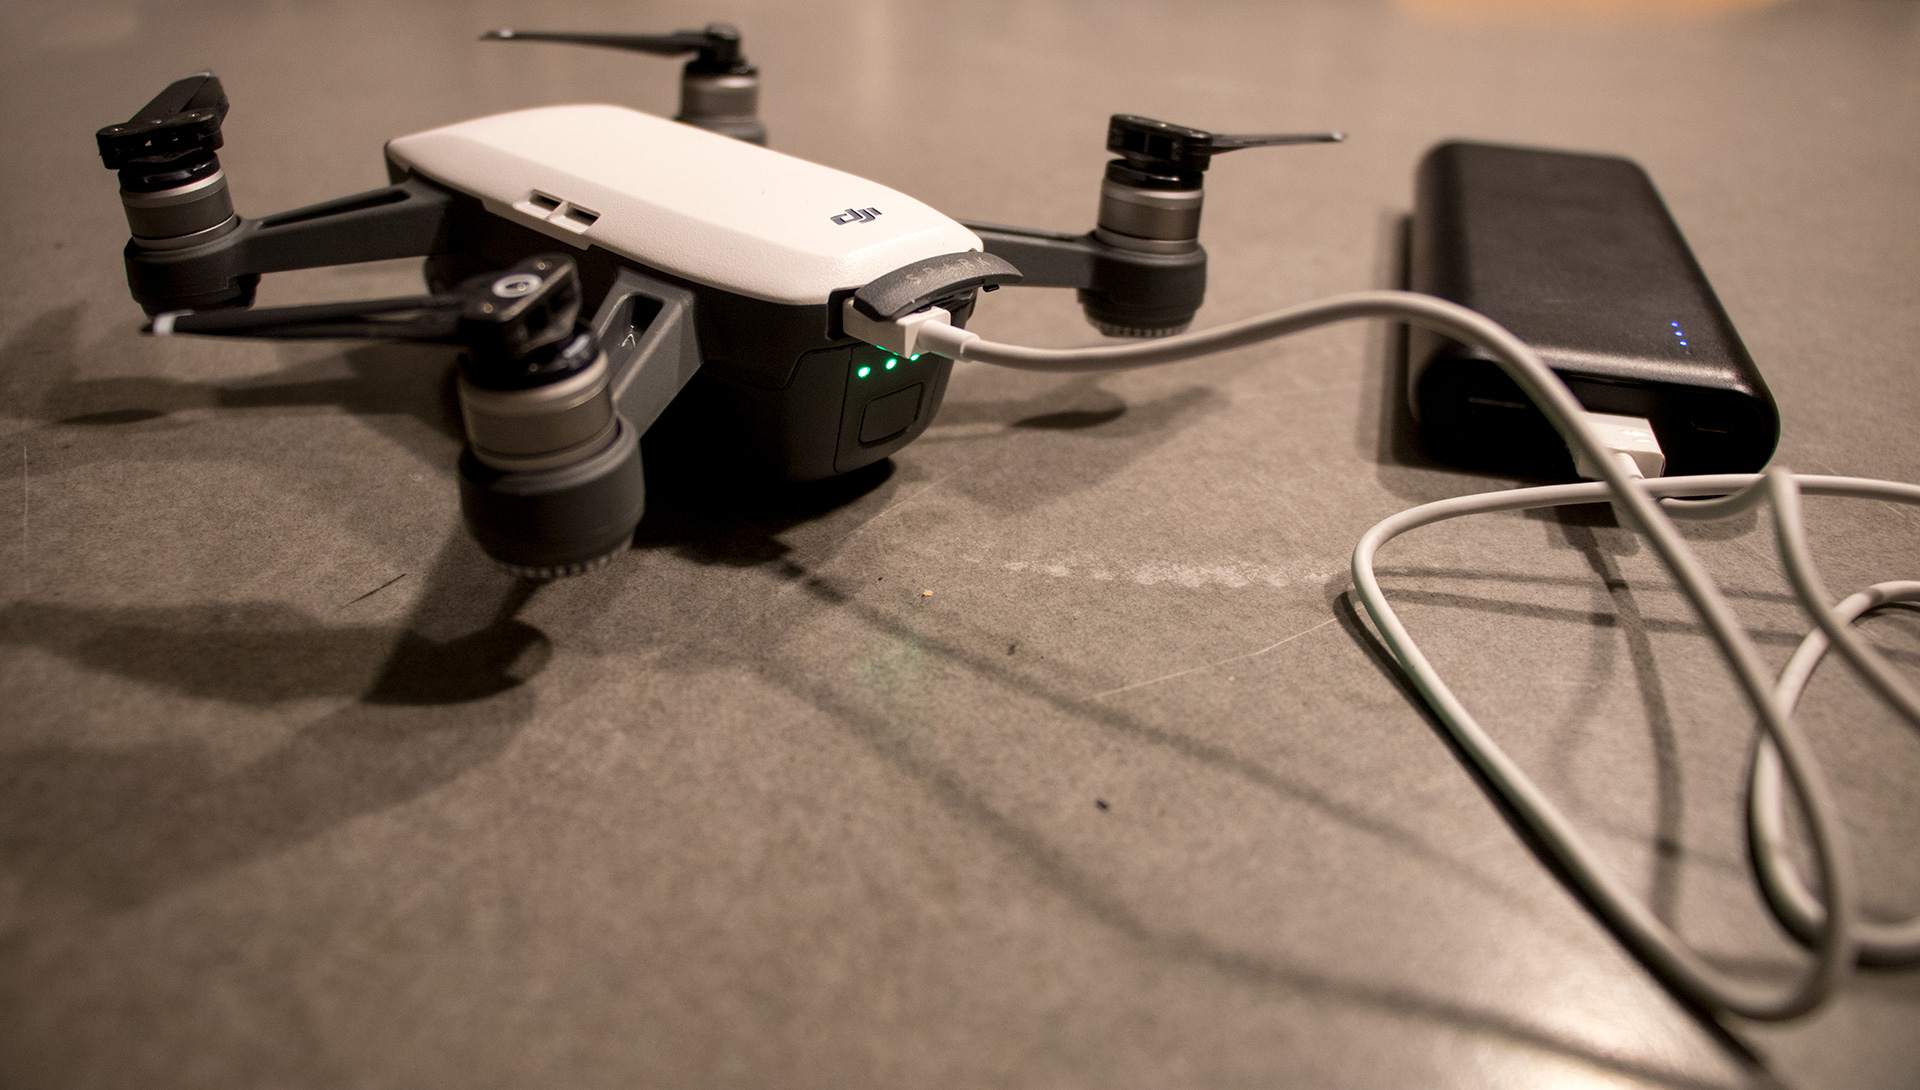 Charge drone via Anker Powerbank